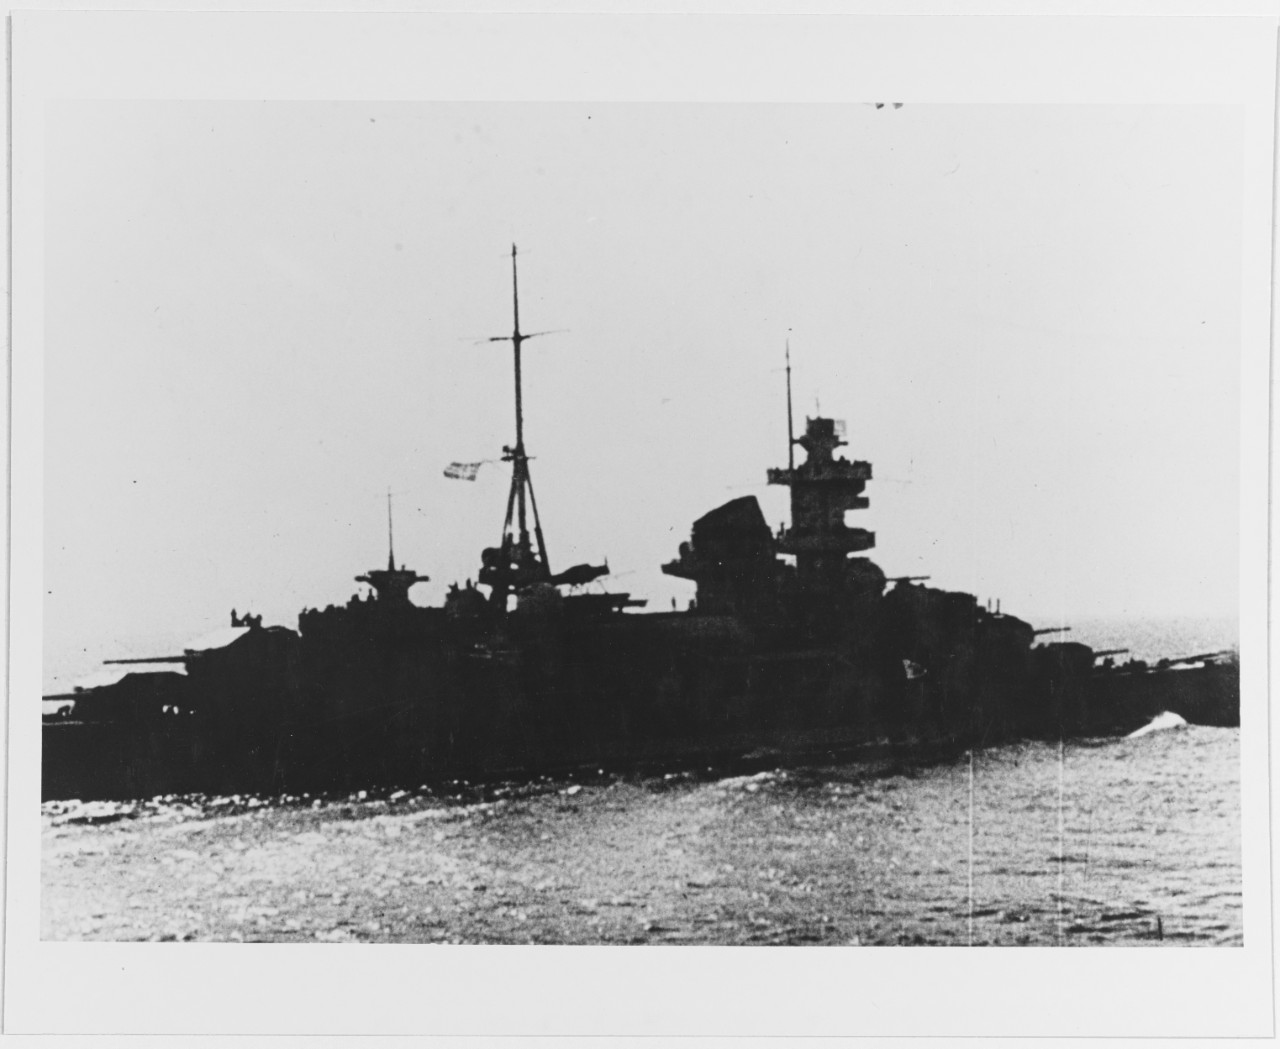 ADMIRAL HIPPER (German heavy cruiser, 1937)